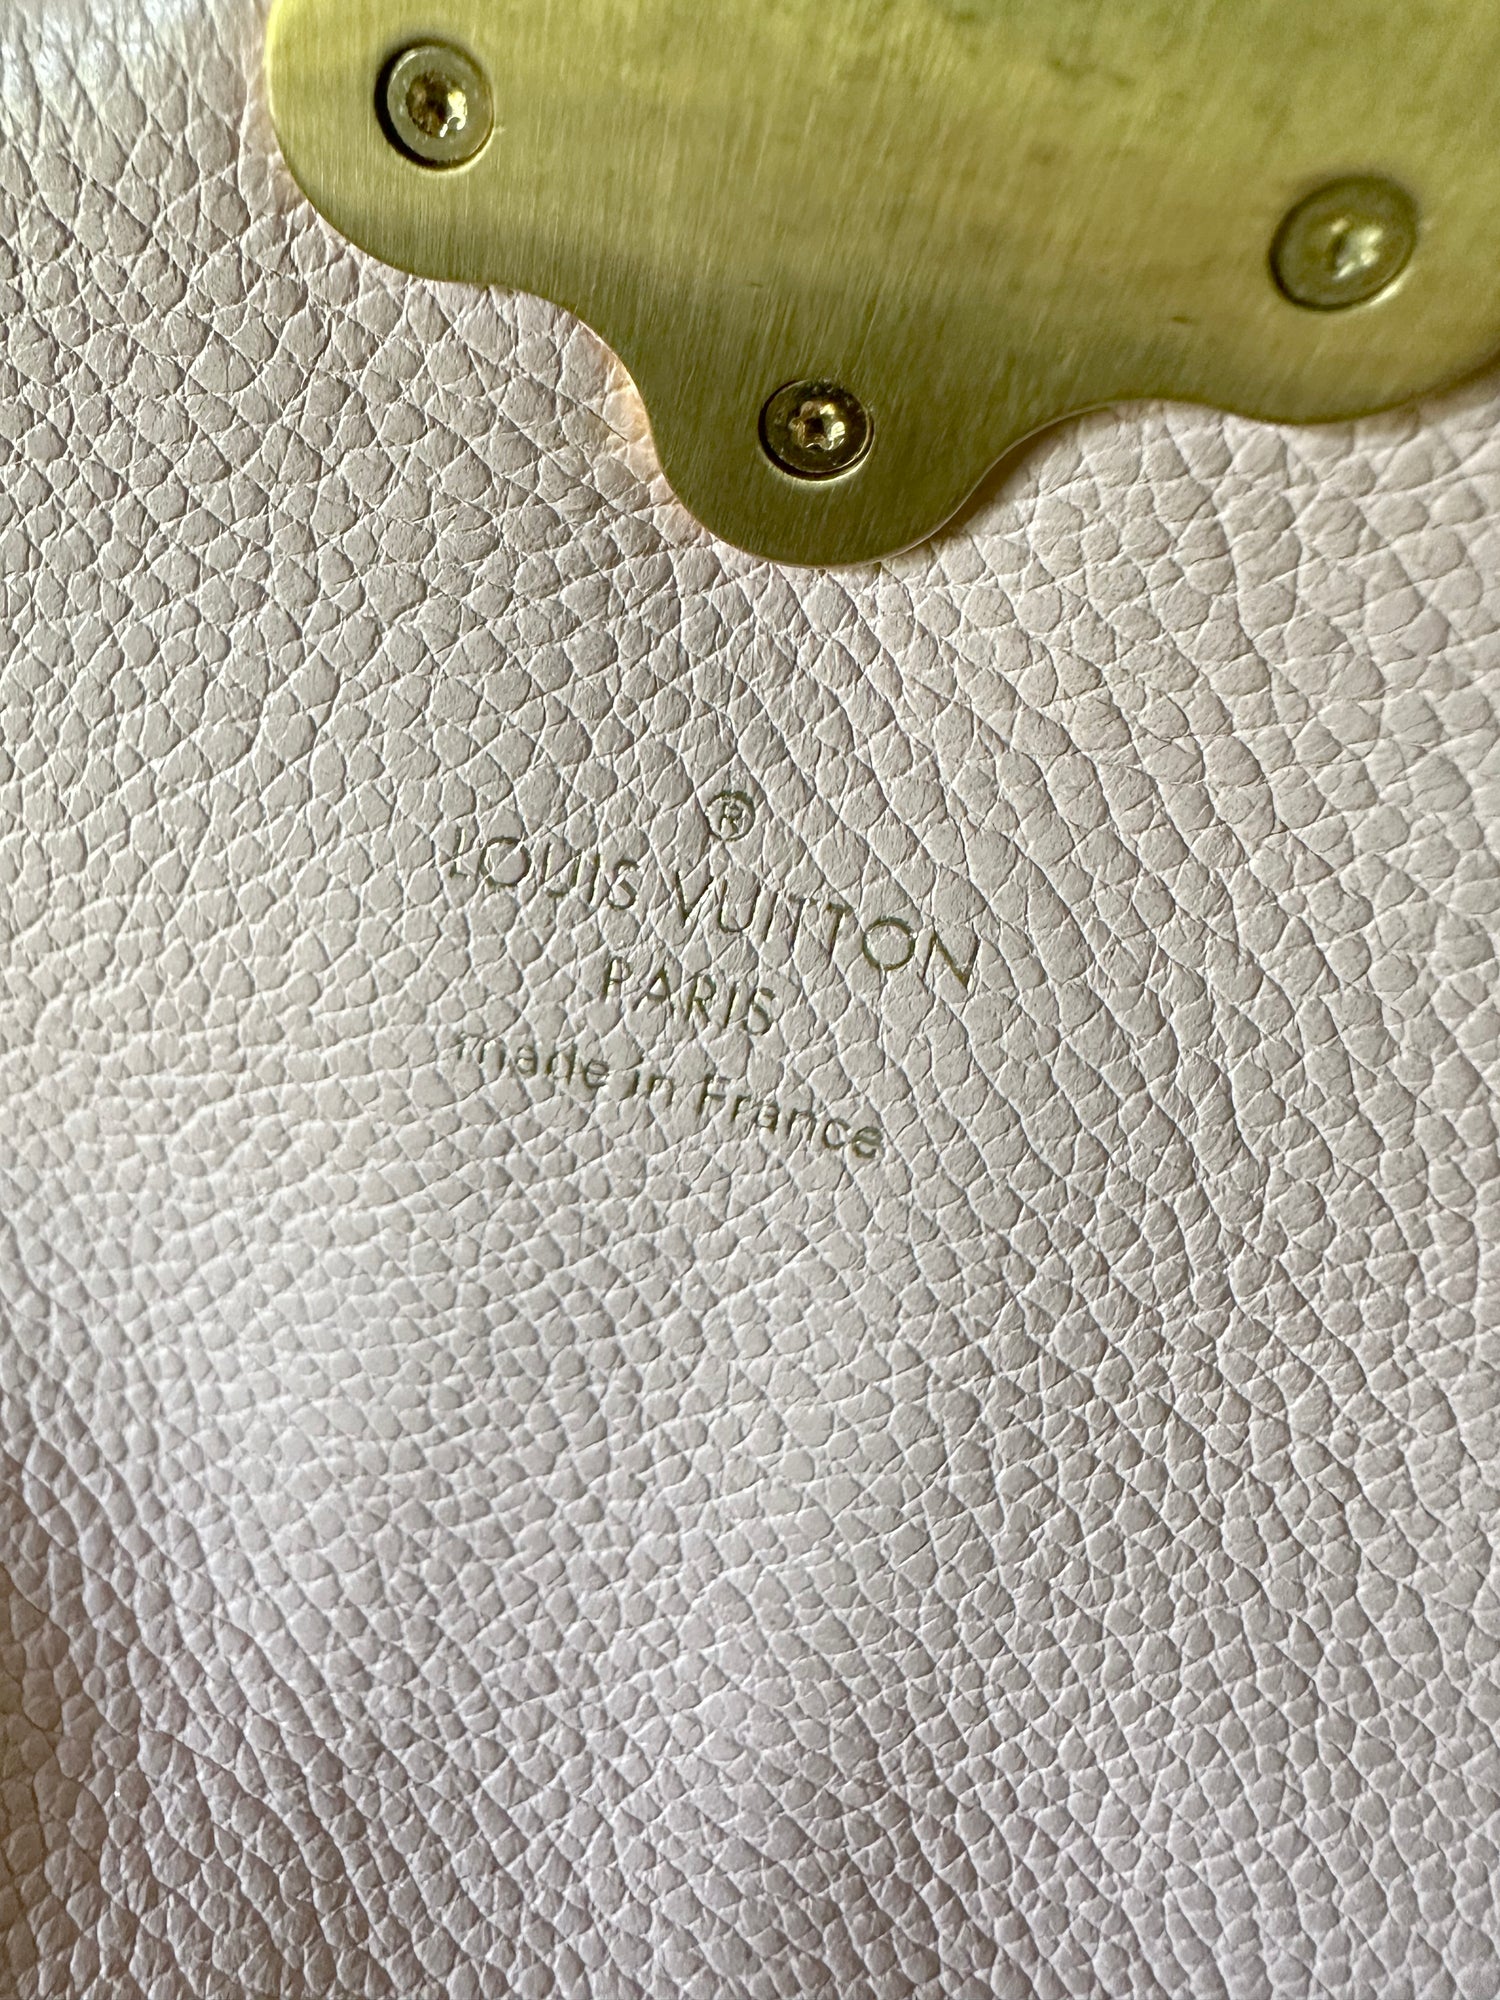 Louis Vuitton Clapton Backpack